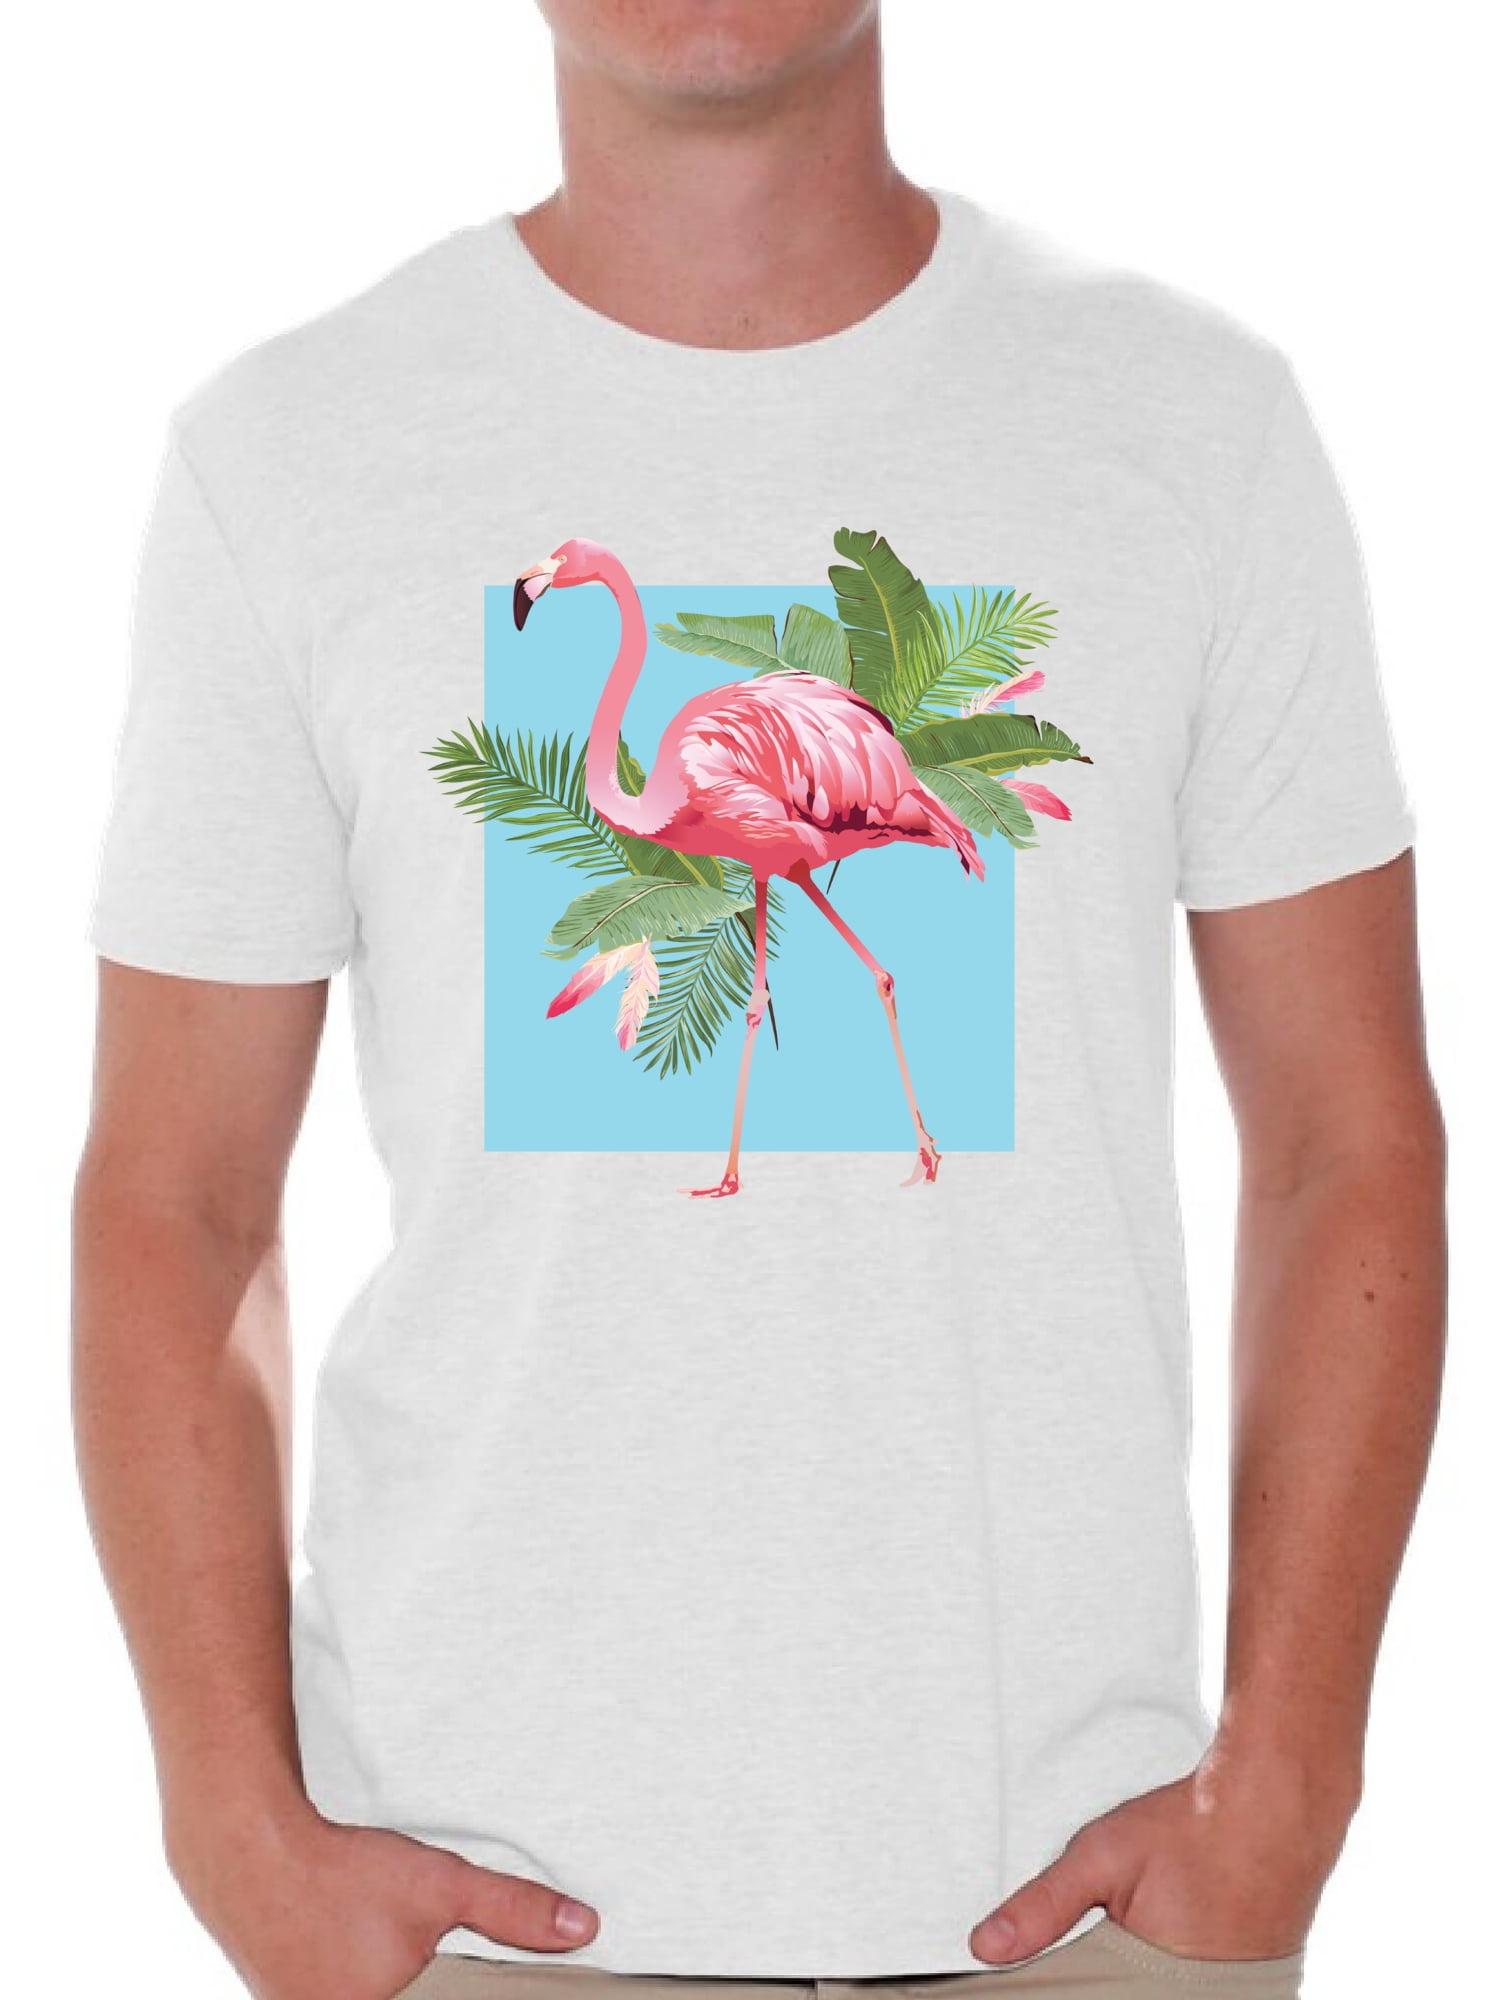 Hawaii Vacation Shirts Flamingo Graphic Tee Always be a Flamingo Flamingo Shirt Vacation Shirt Funny Pink Flamingo Flamingo tshirt